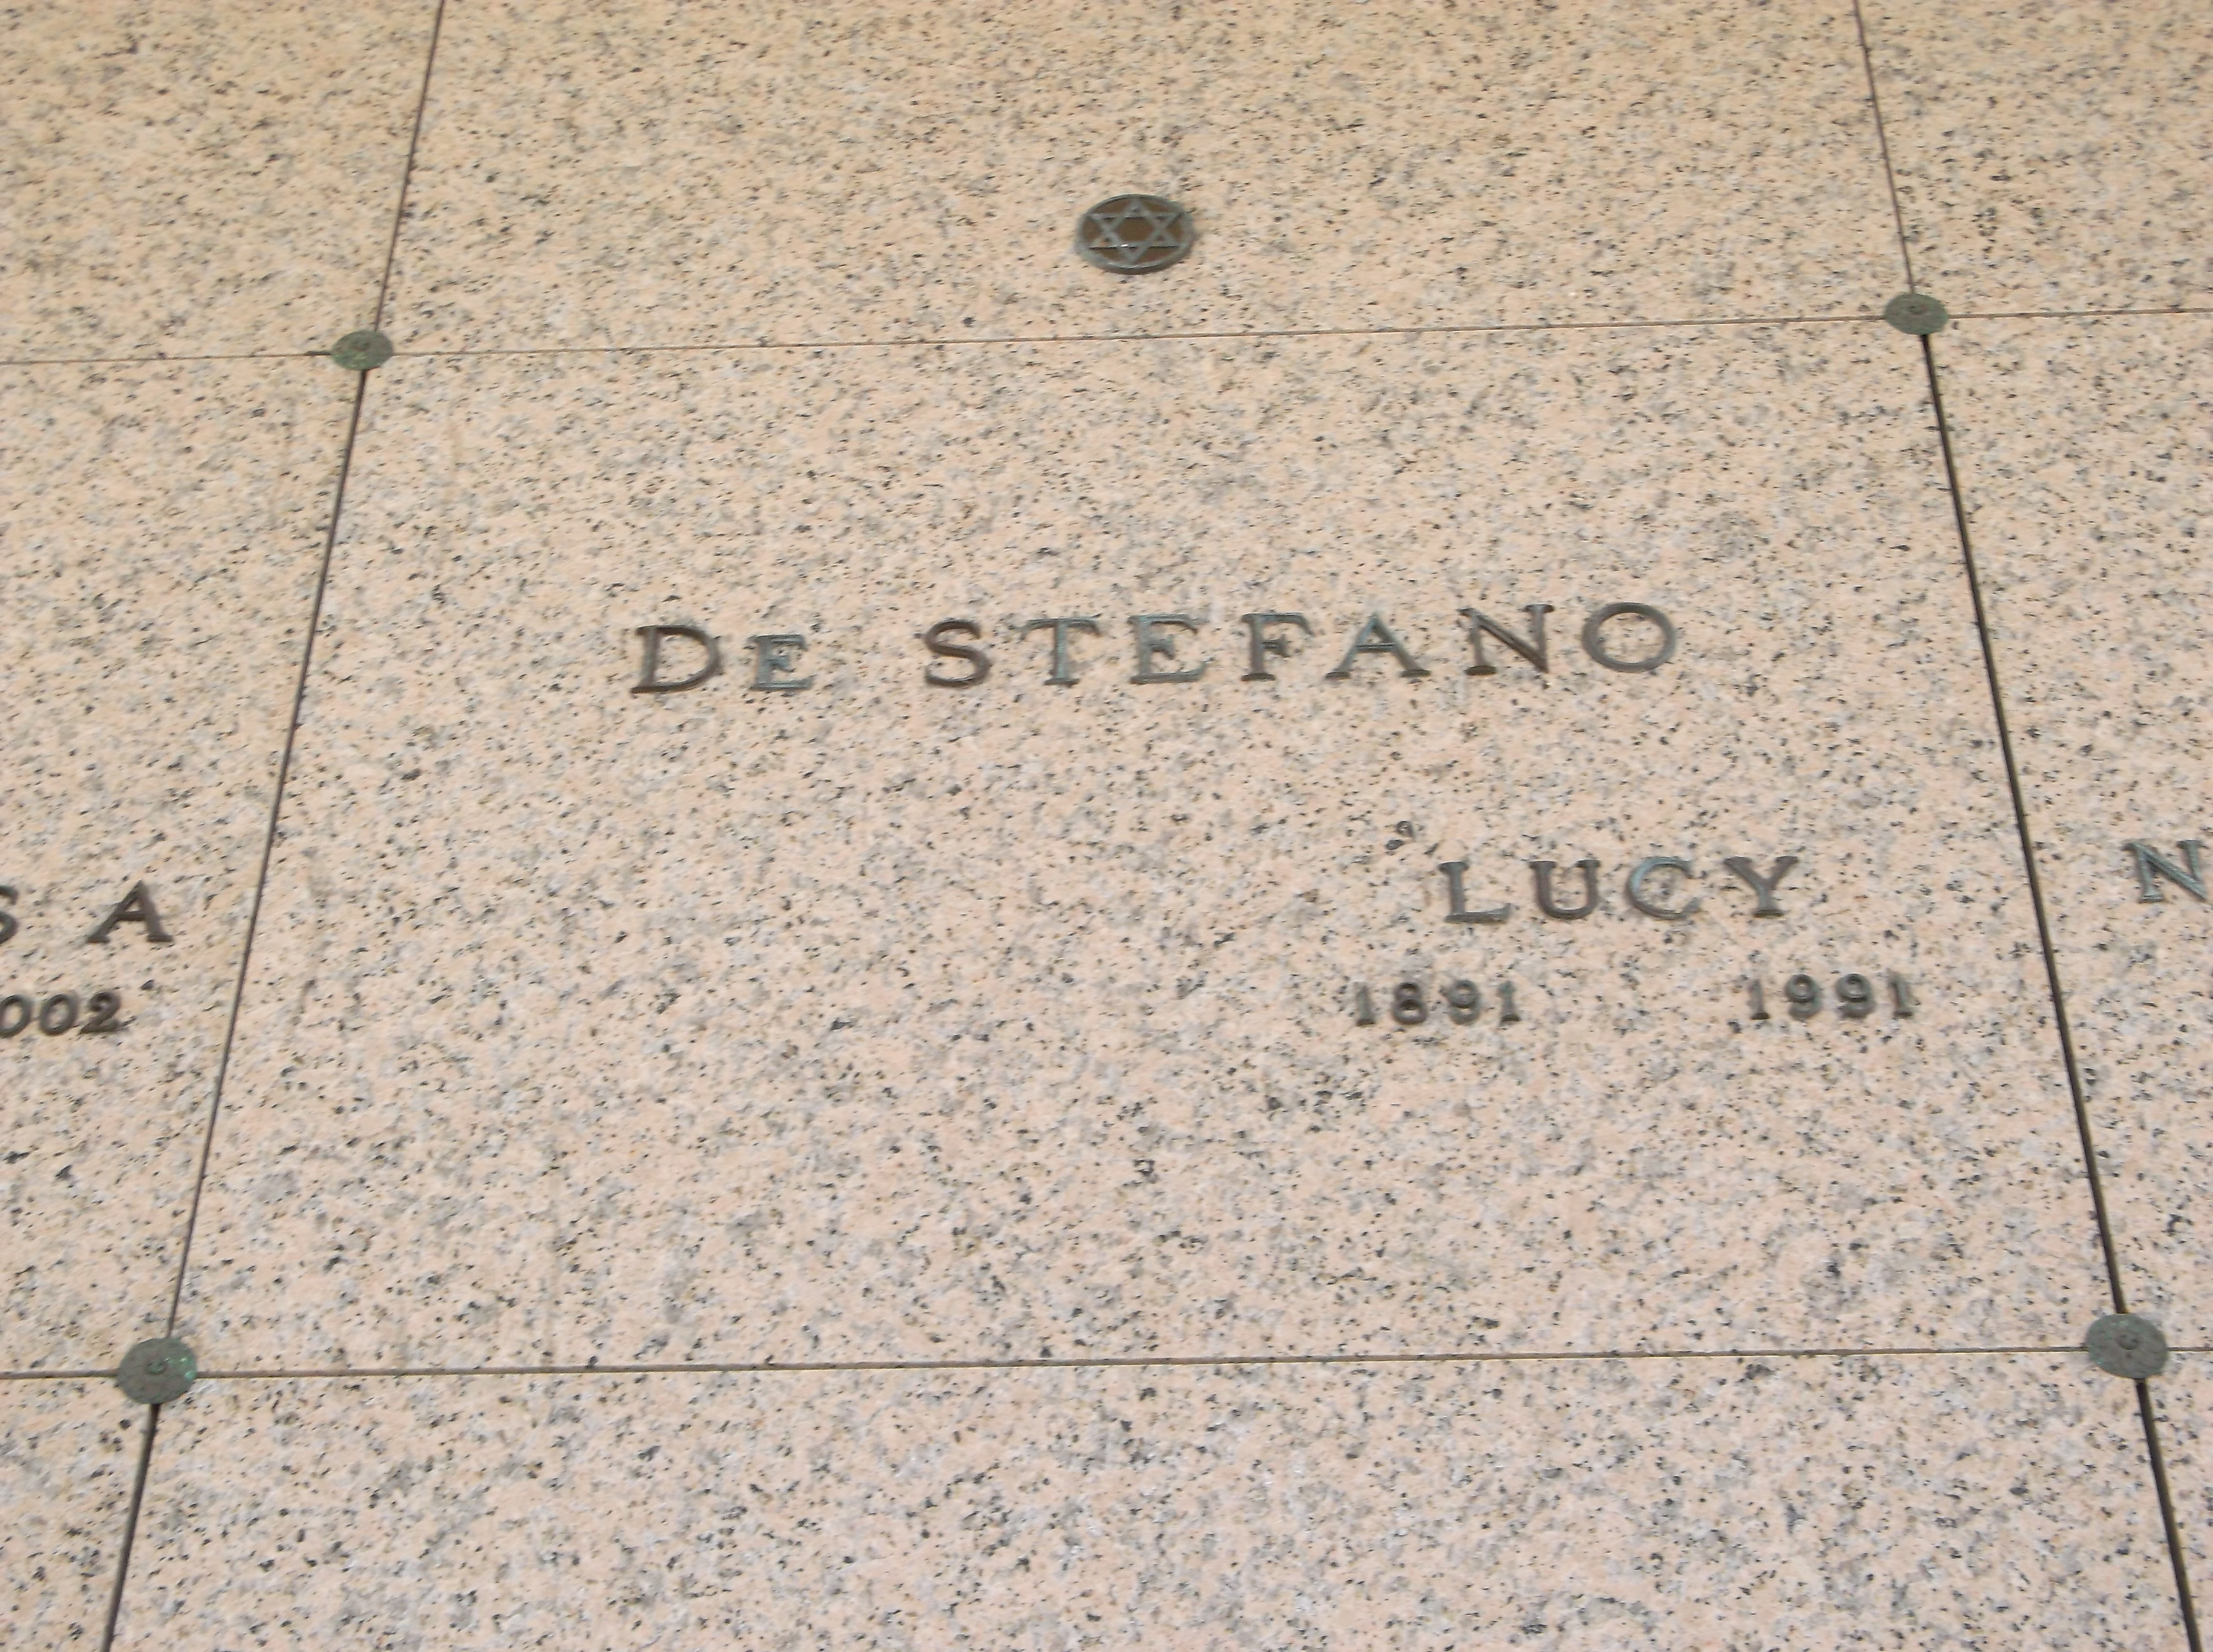 Lucy De Stefano